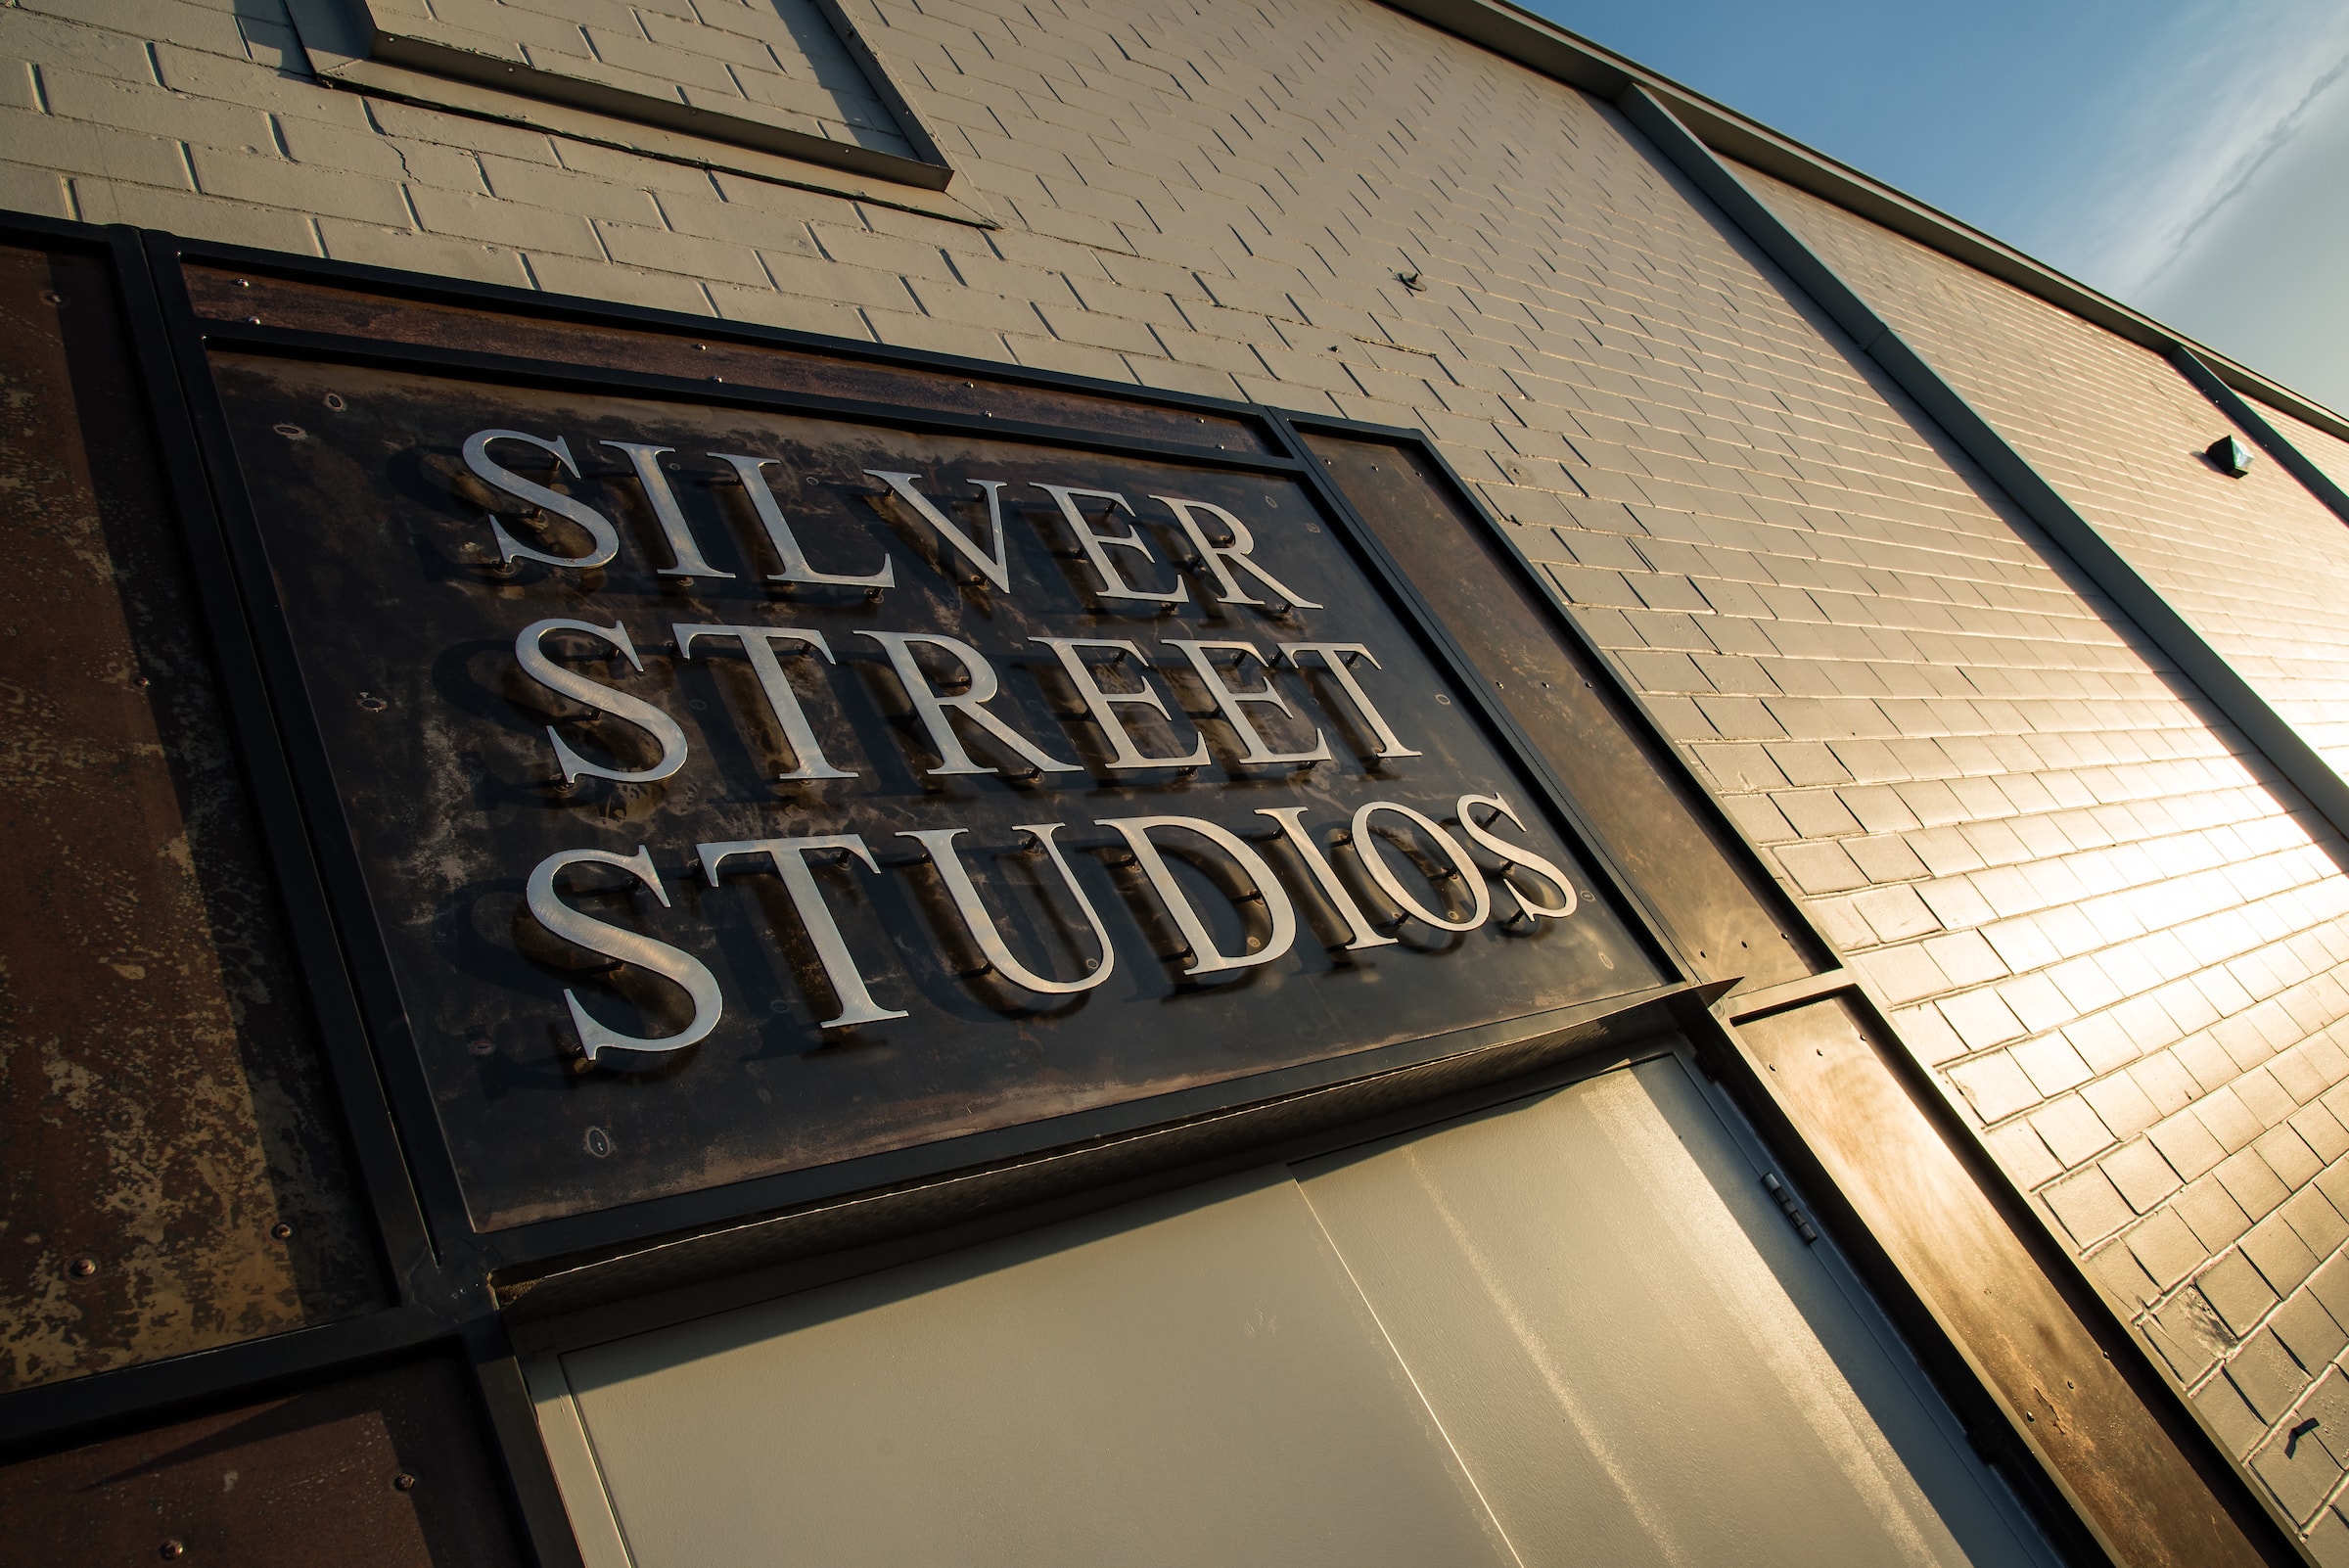 Silver-Street-Studios2-min